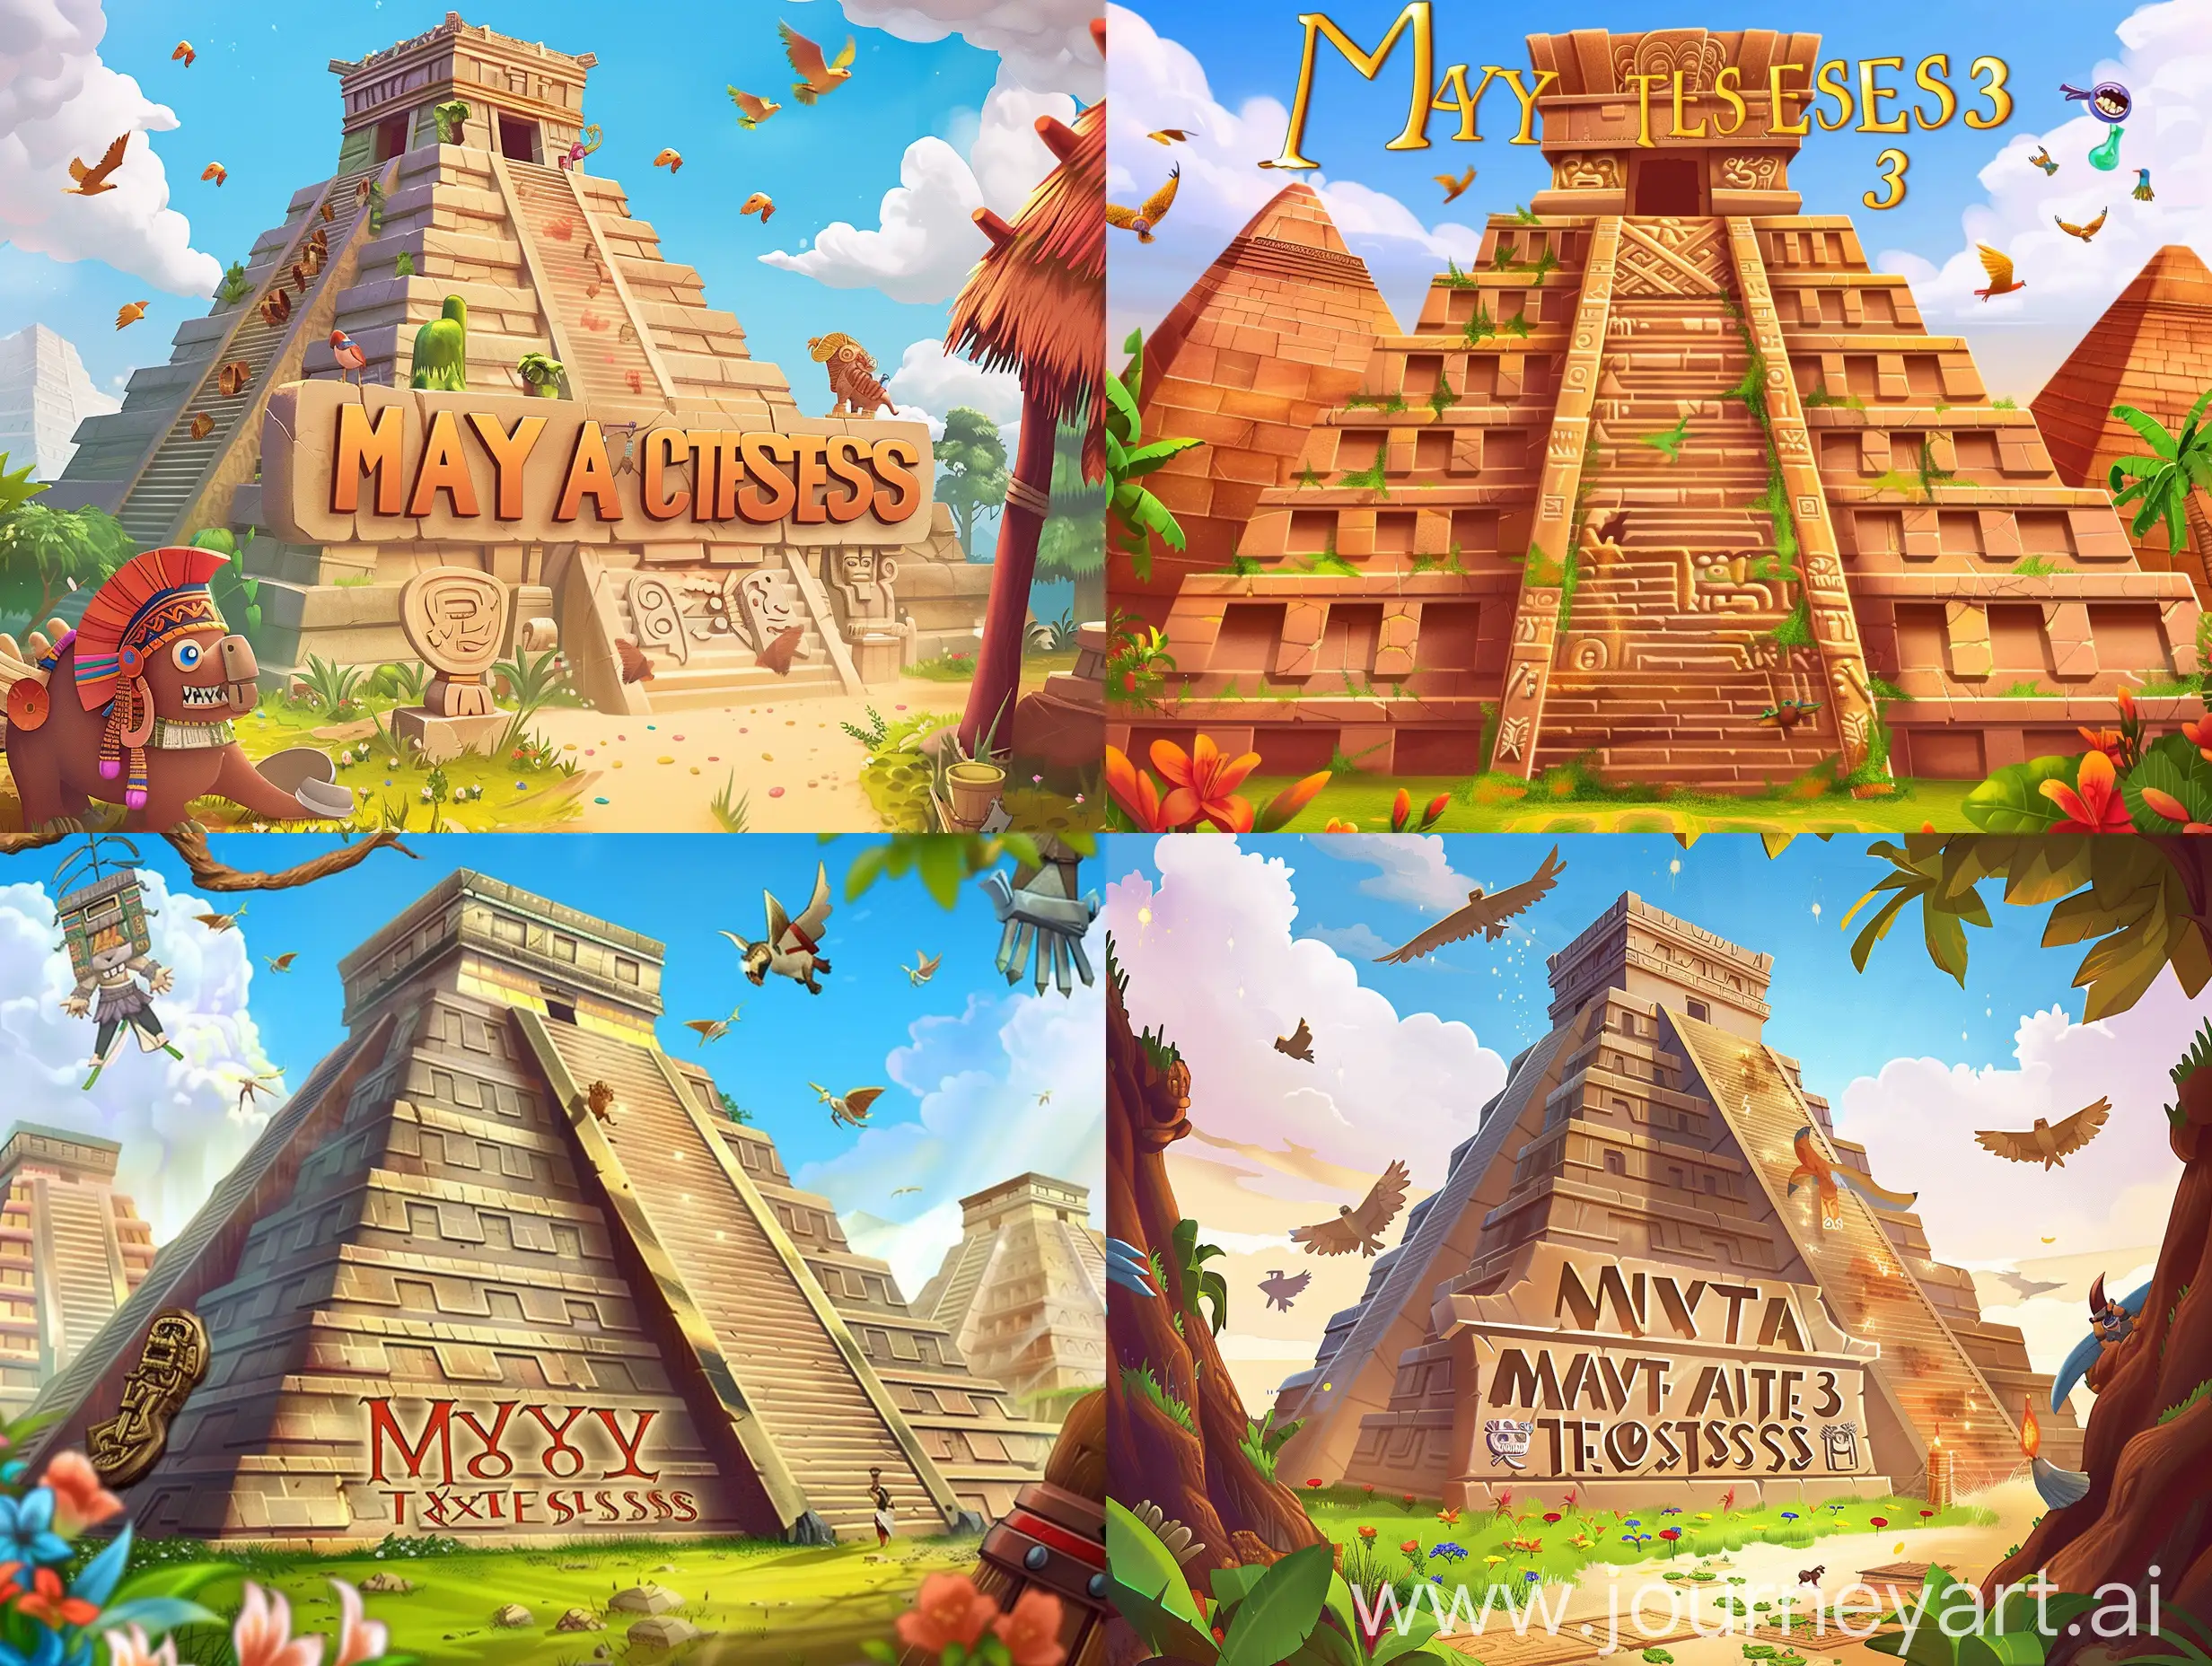 Mayan-Pyramids-Match-3-Game-Discover-Maya-Treasures